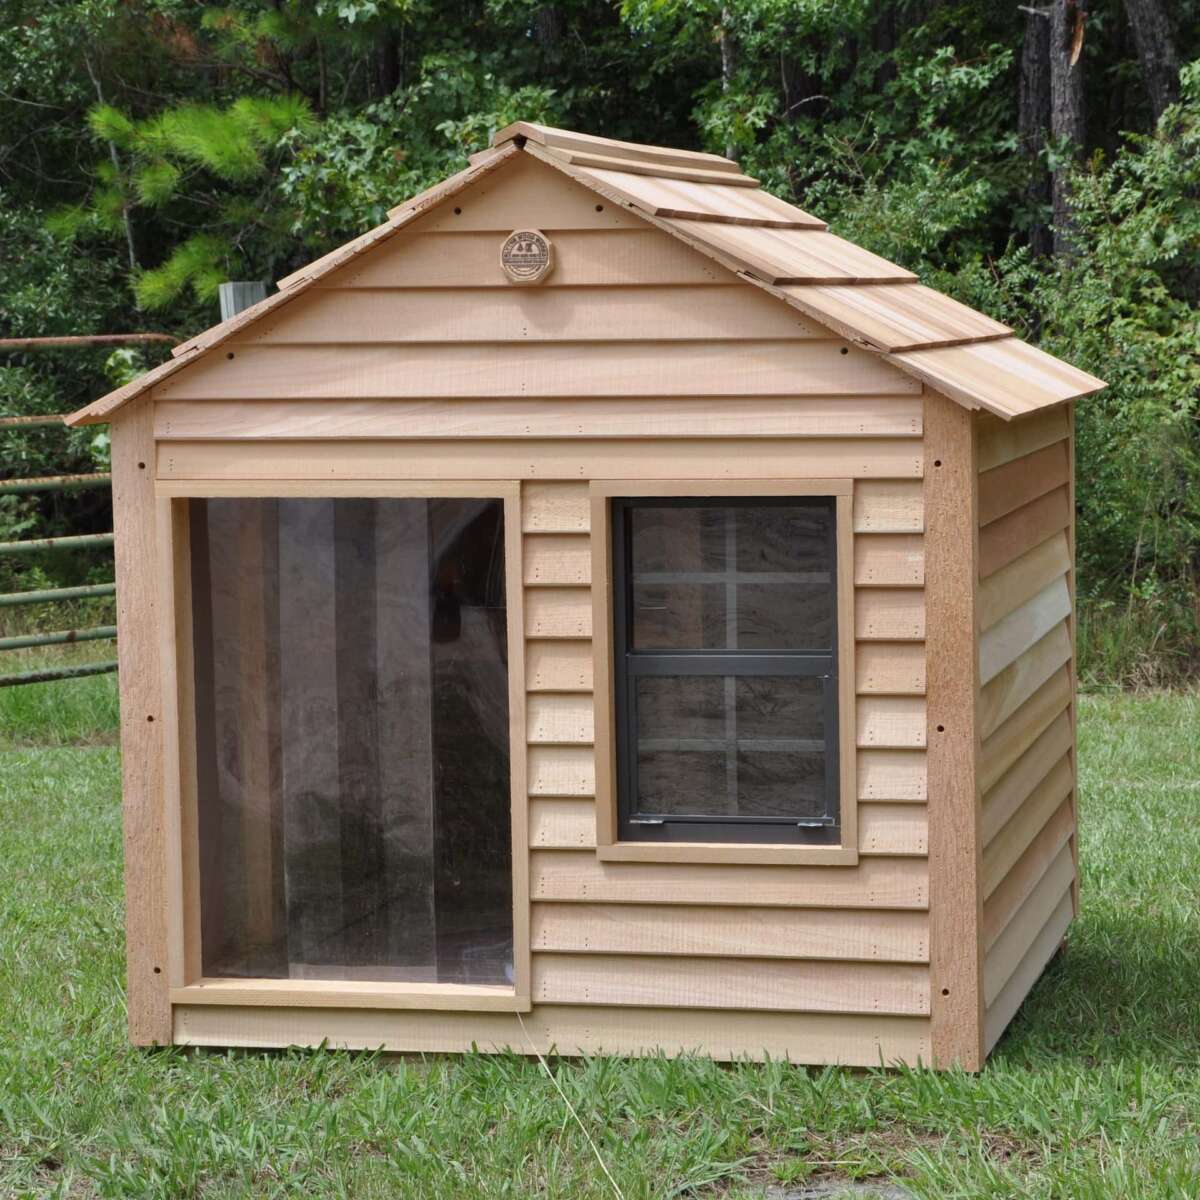 https://blythewoodworks.com/wp-content/uploads/2022/10/Extra-Large-Dog-House-shown-with-optional-Sliding-Window.jpg